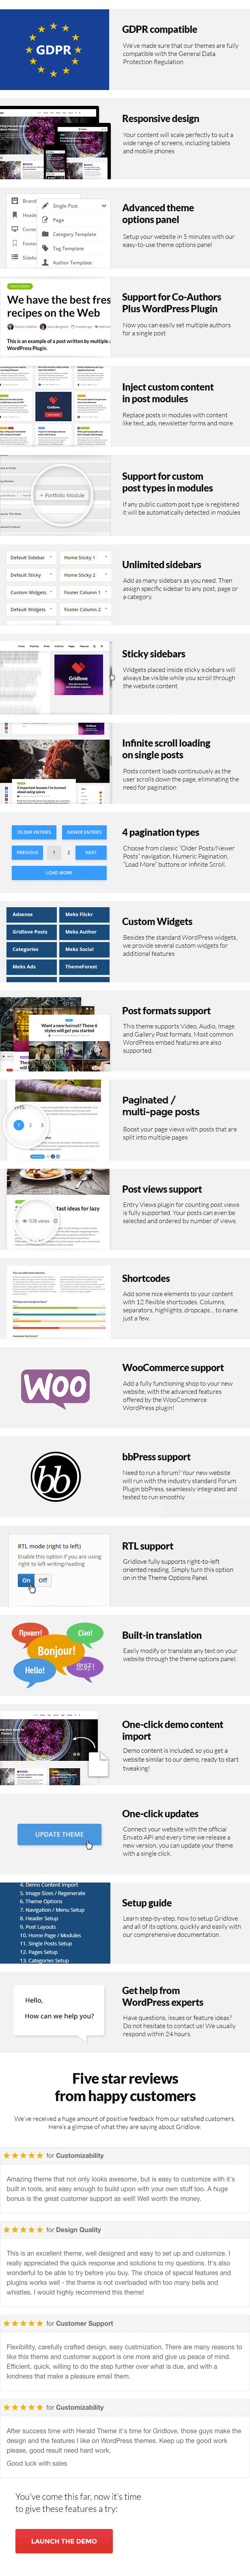 Gridlove - Creative Grid Style News & Magazine WordPress Theme - 2